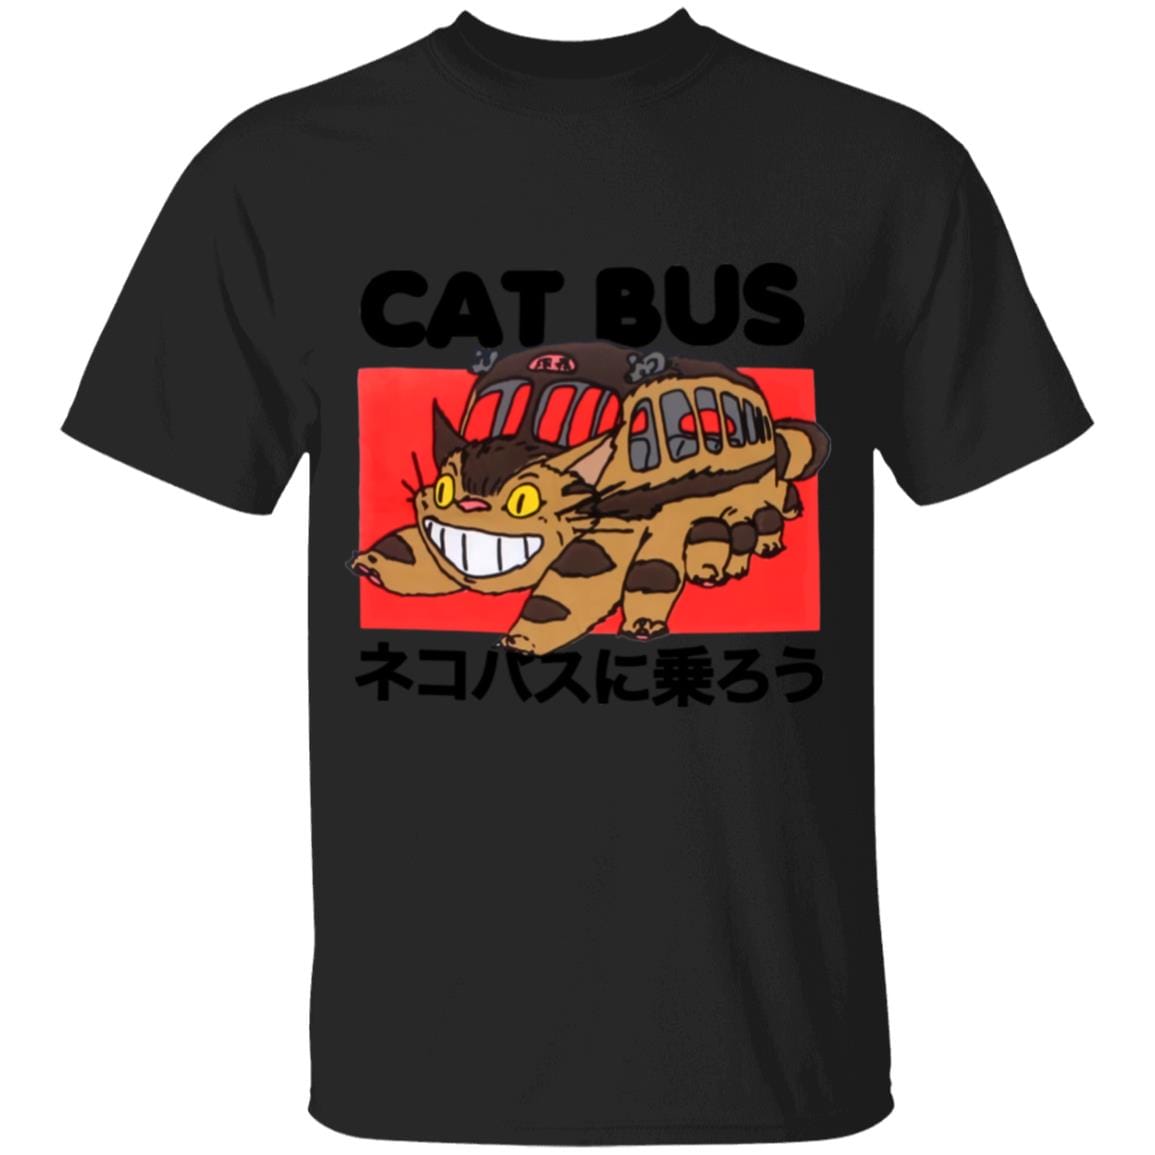 My Neighbor Totoro Cat Bus T Shirt for Kid Ghibli Store ghibli.store